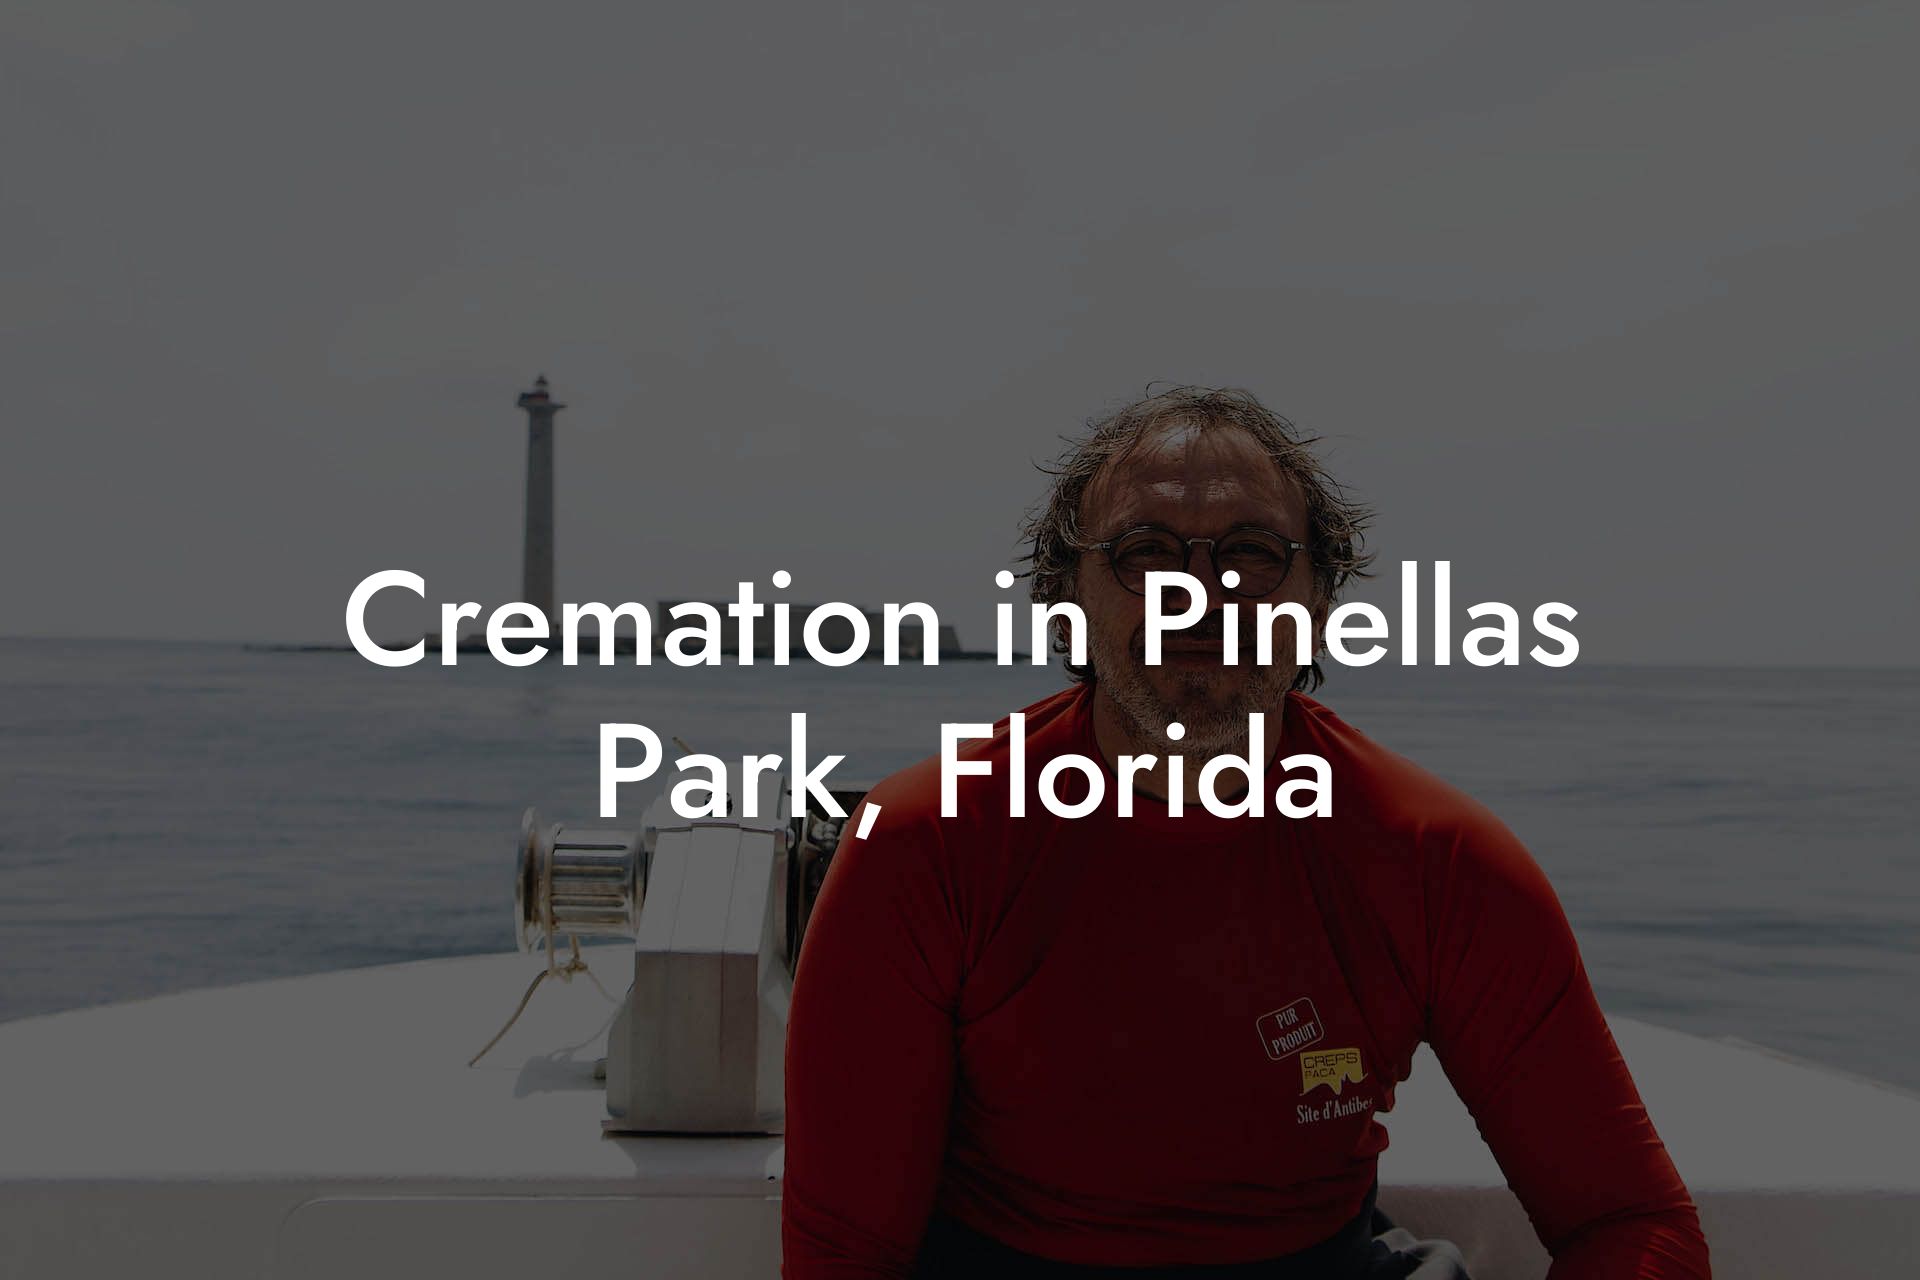 Cremation in Pinellas Park, Florida